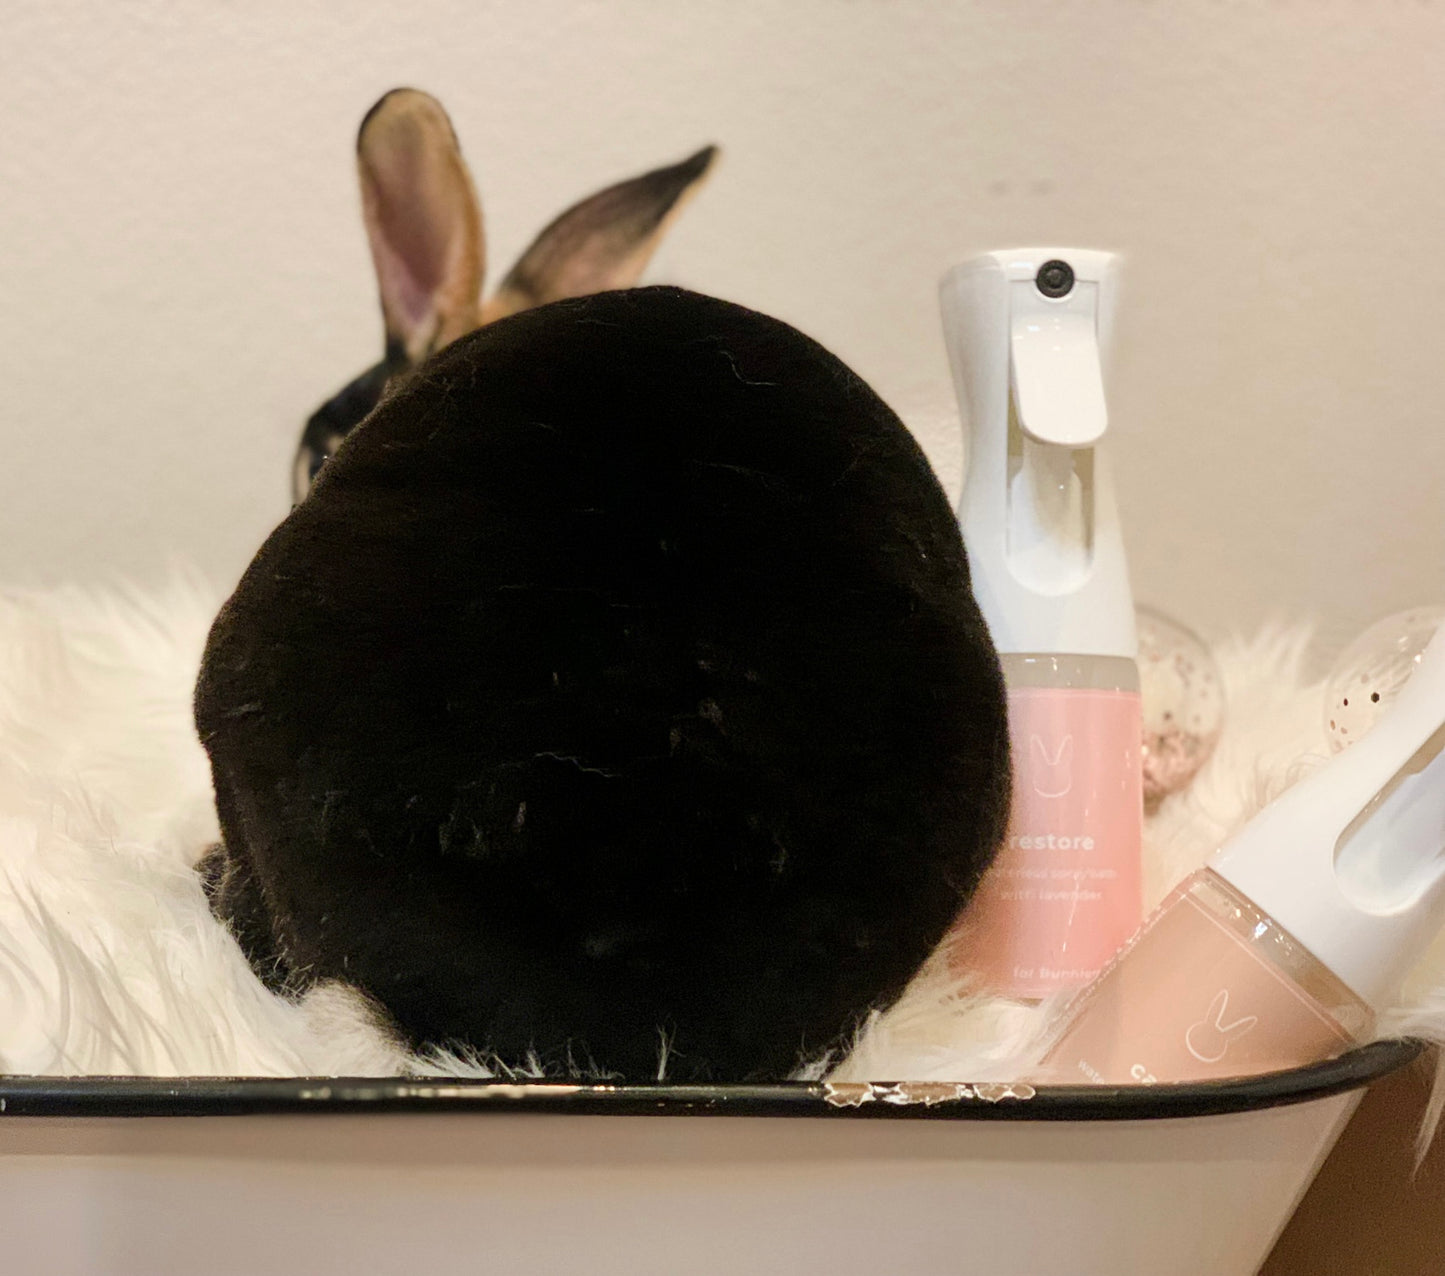 Calm Bunny, No Rinse Waterless Spray Bath  5.5 oz - PetPotion™